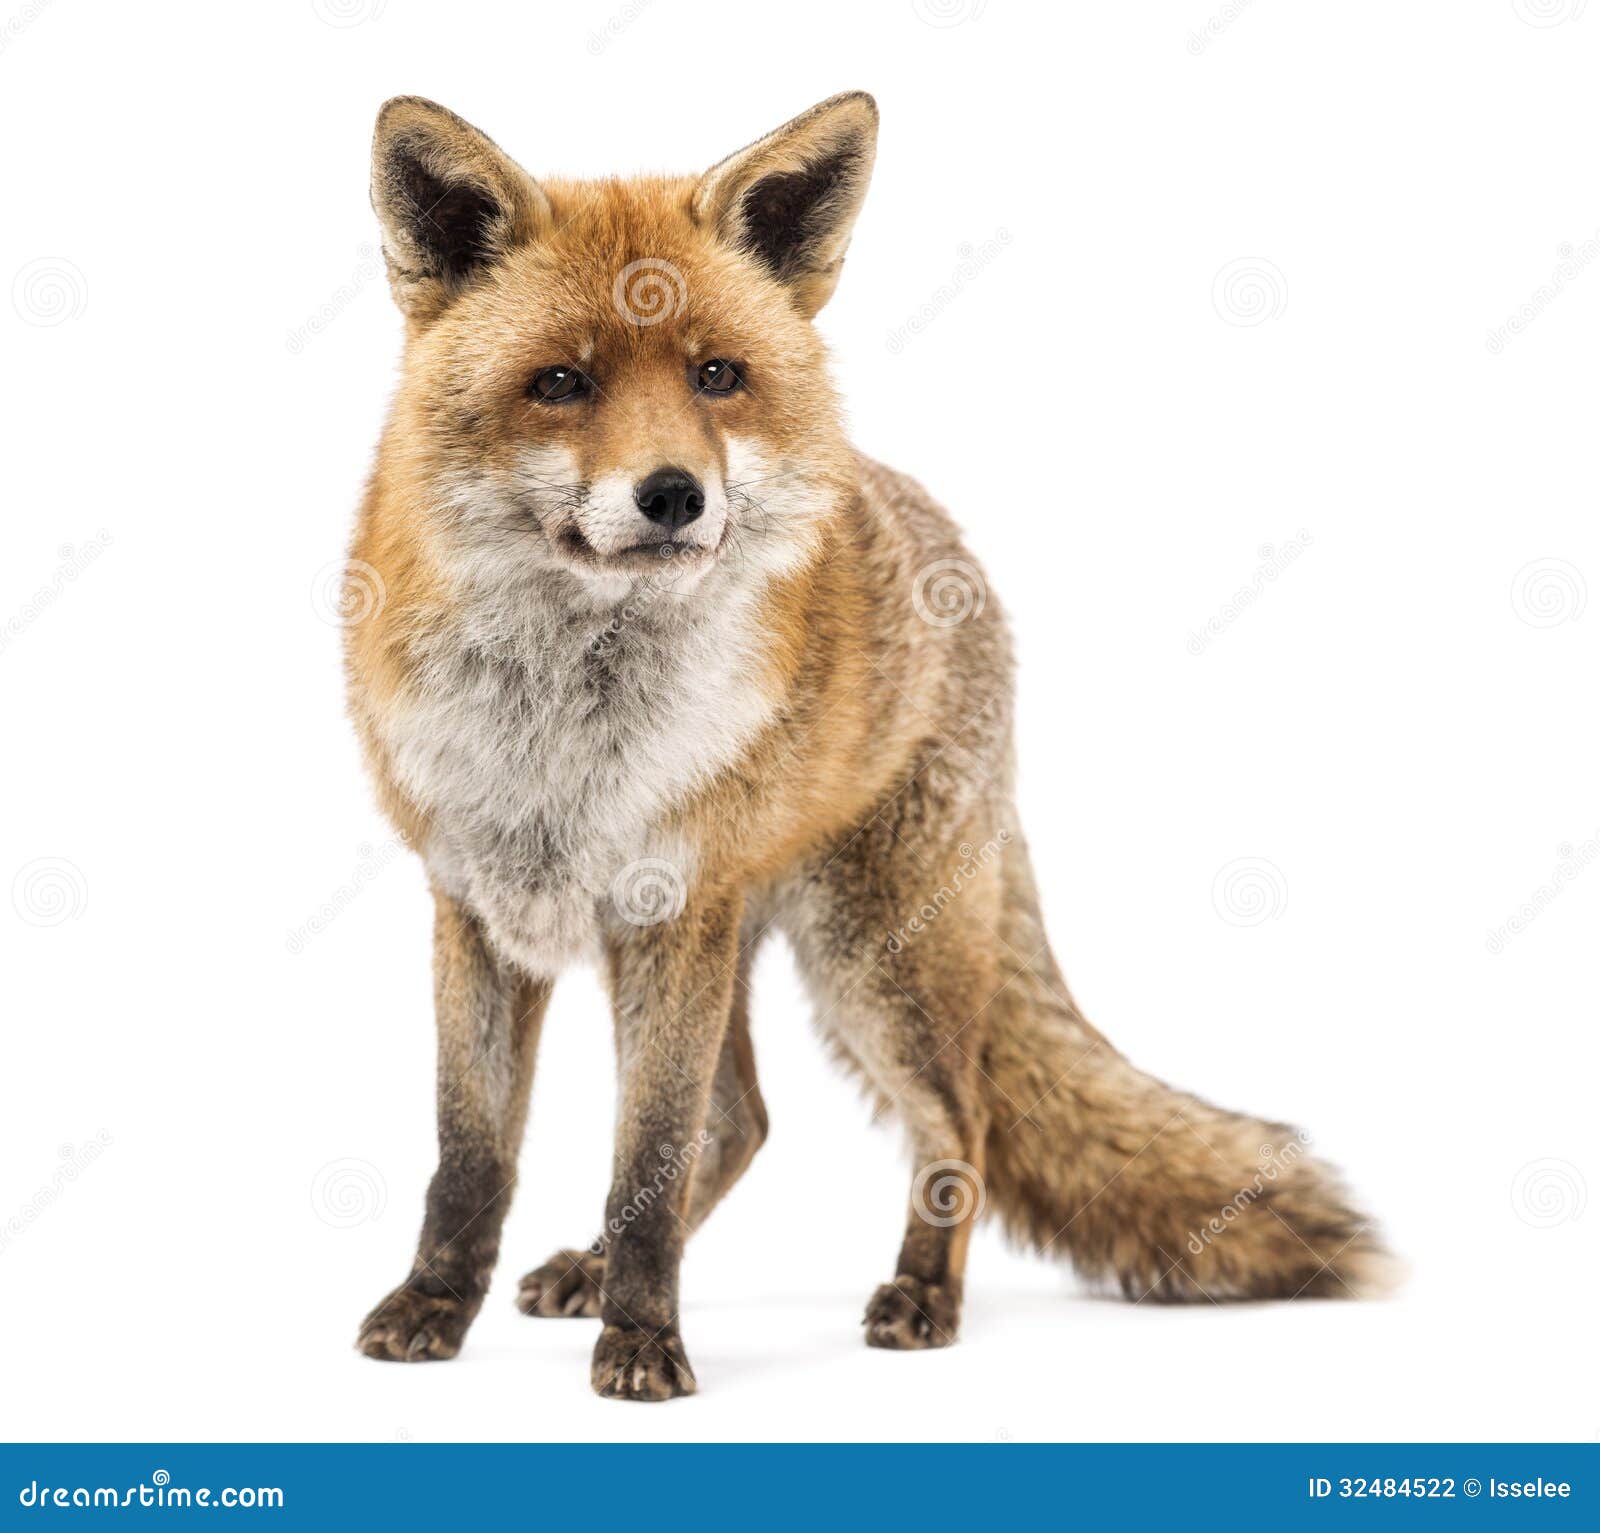 red fox, vulpes vulpes, standing